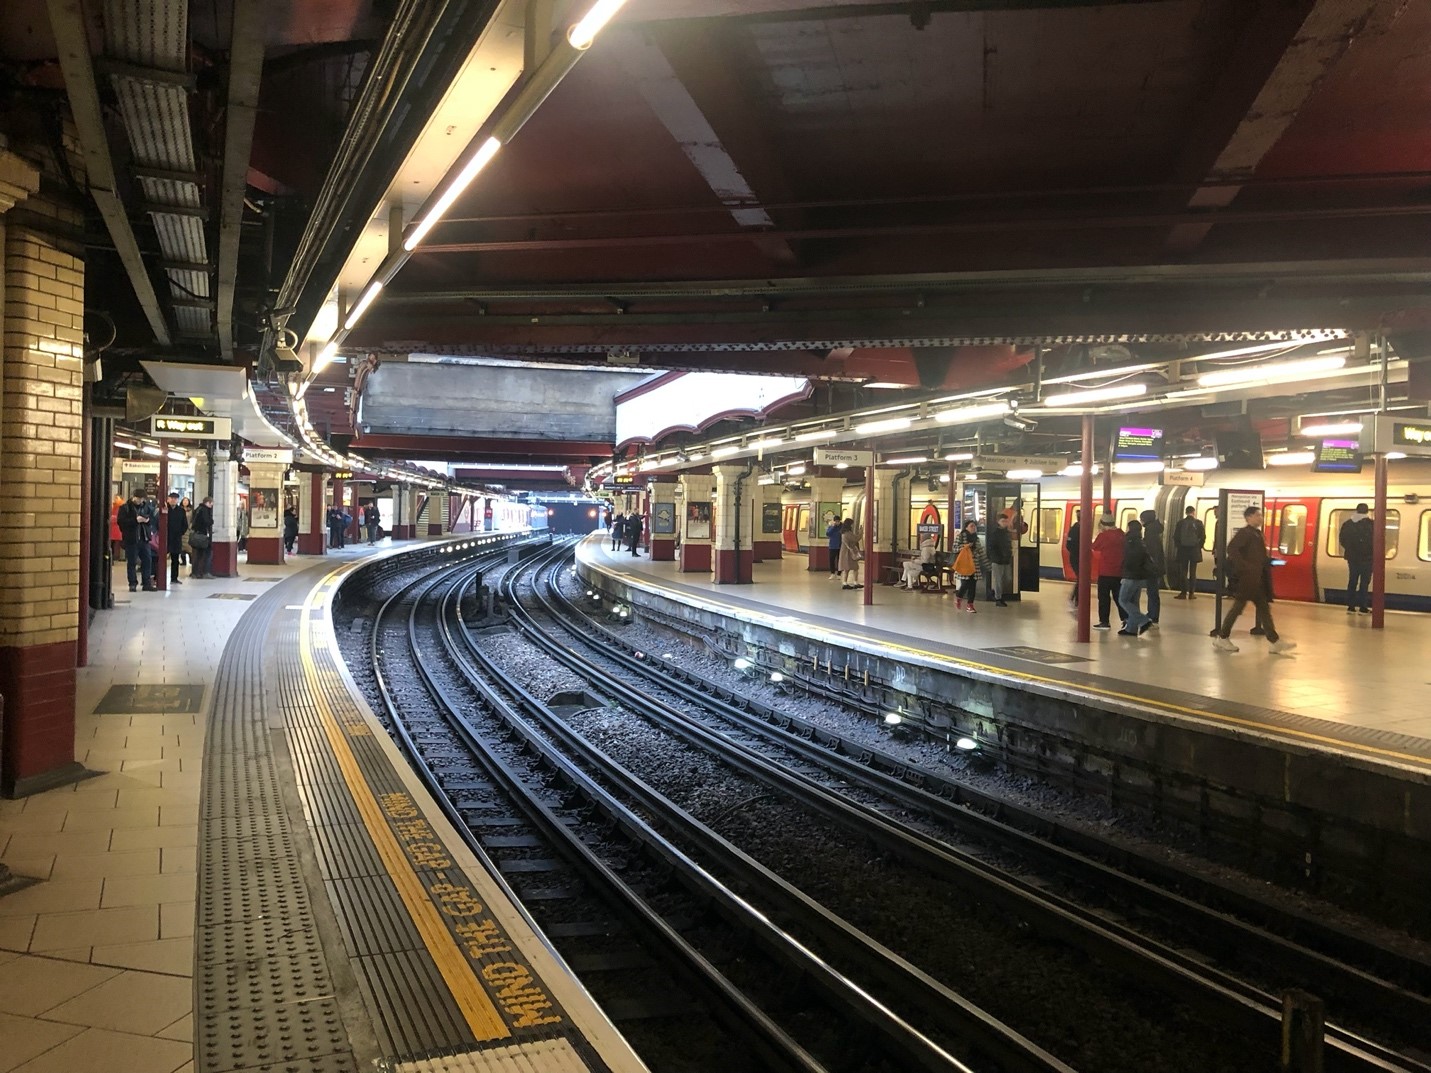 Learnding the Tube in London